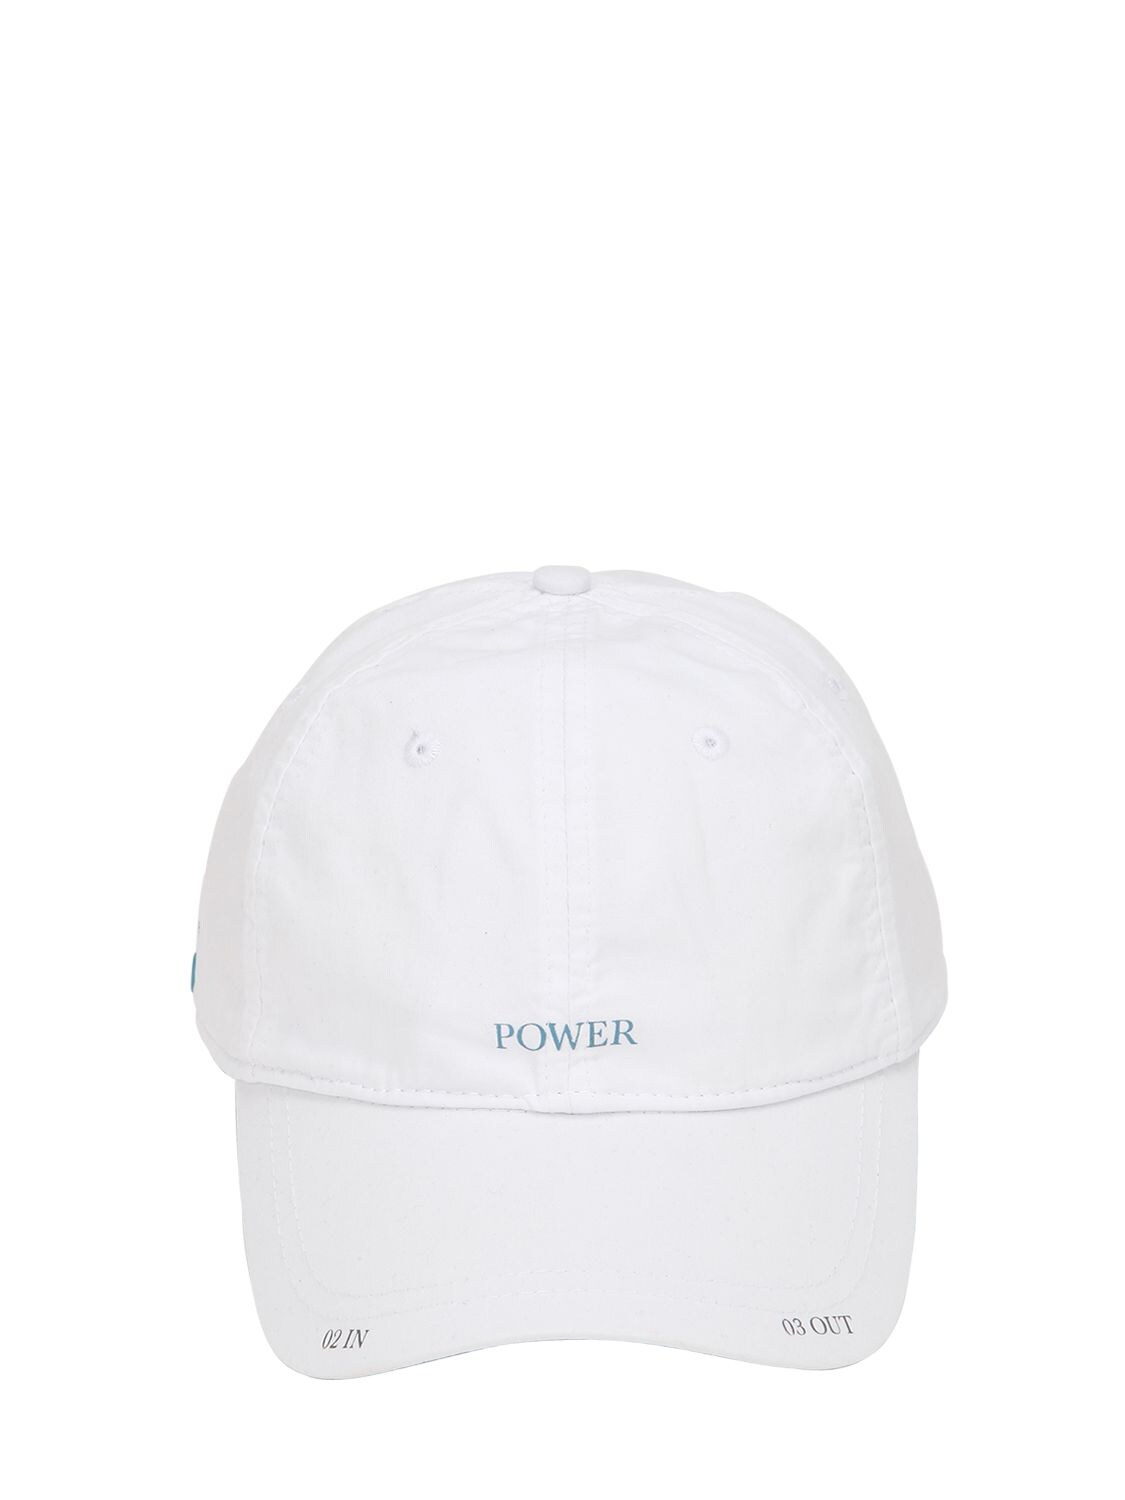 C2h4 Ozone Generator Baseball Hat In White